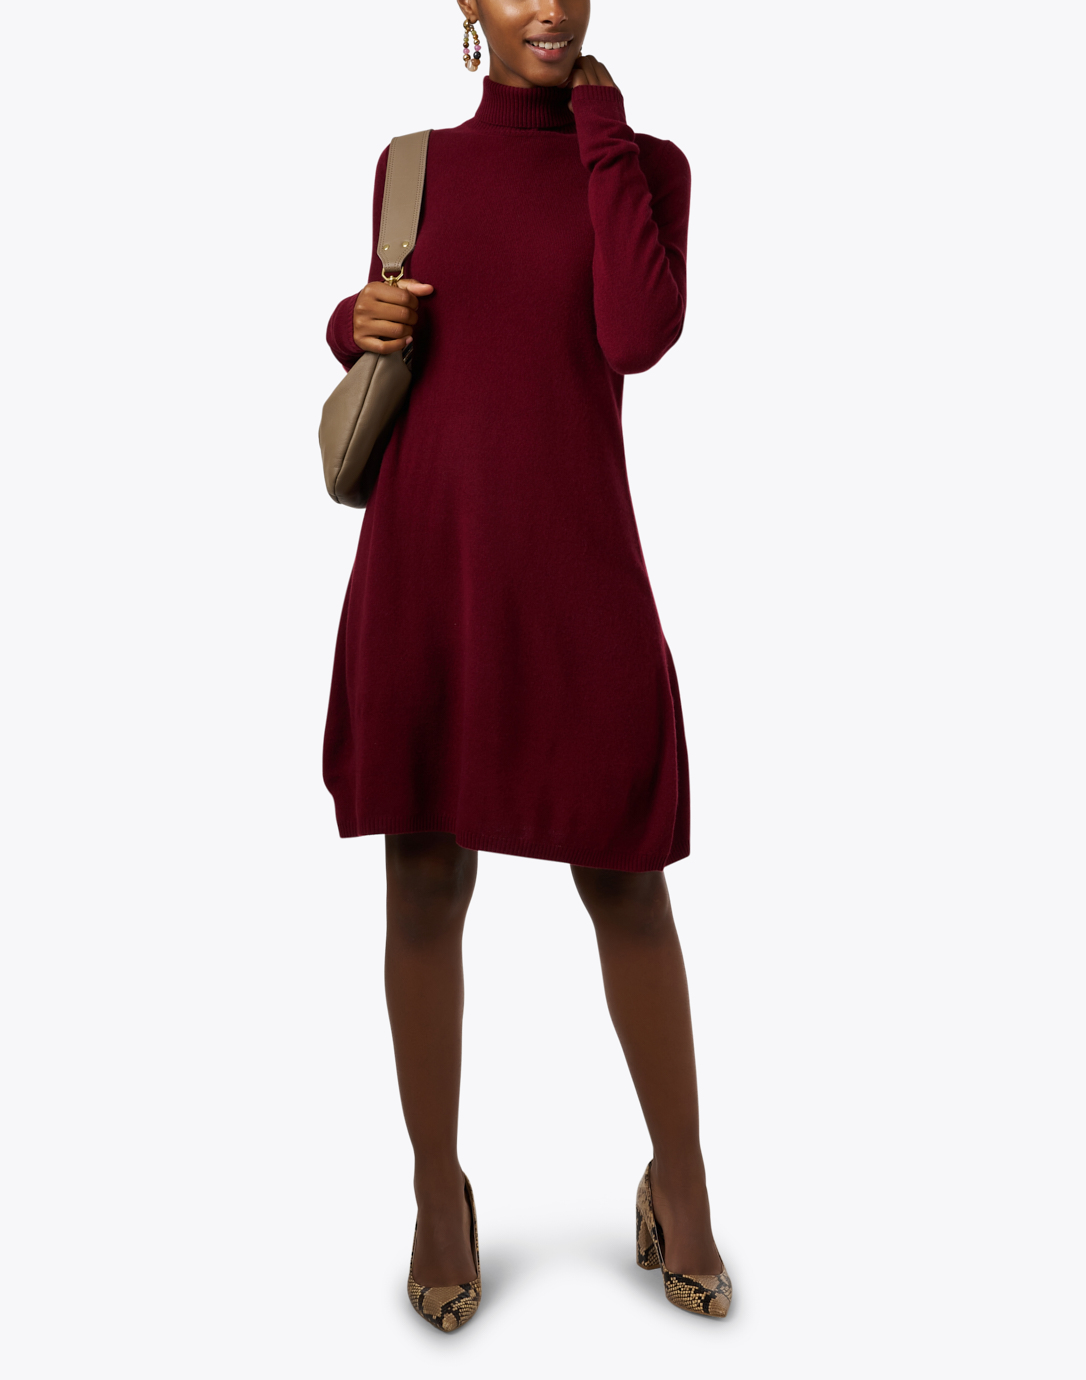 Bordeaux Red Wool Cashmere Turtleneck Dress